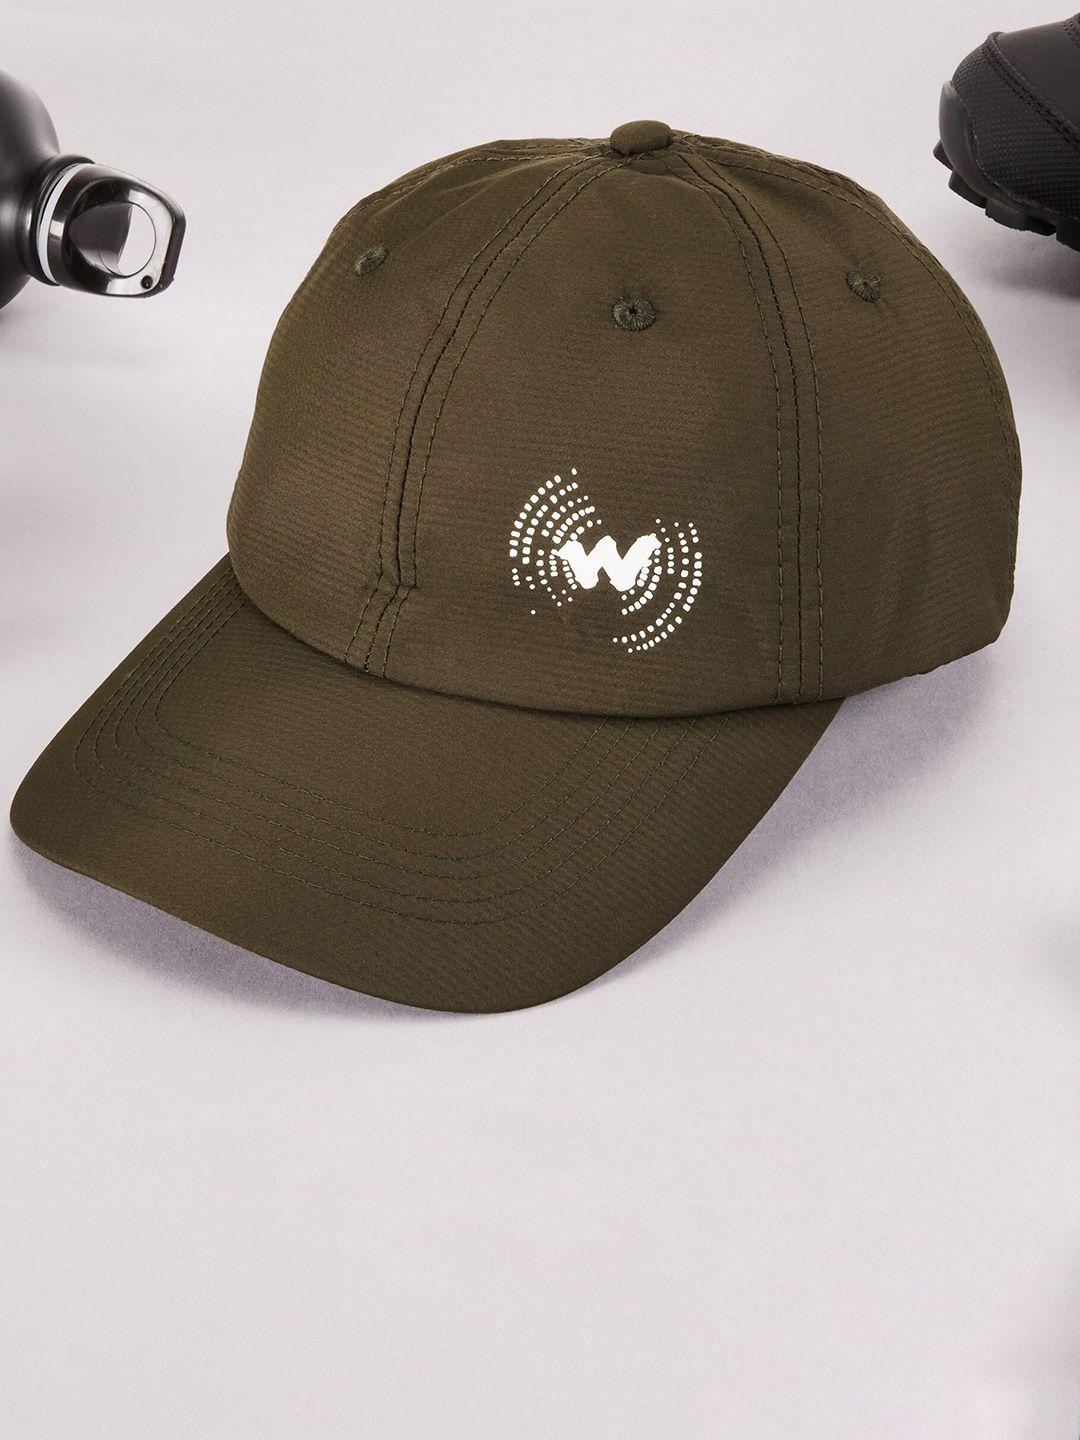 wildcraft adults olive green & white brand logo printed cotton baseball cap